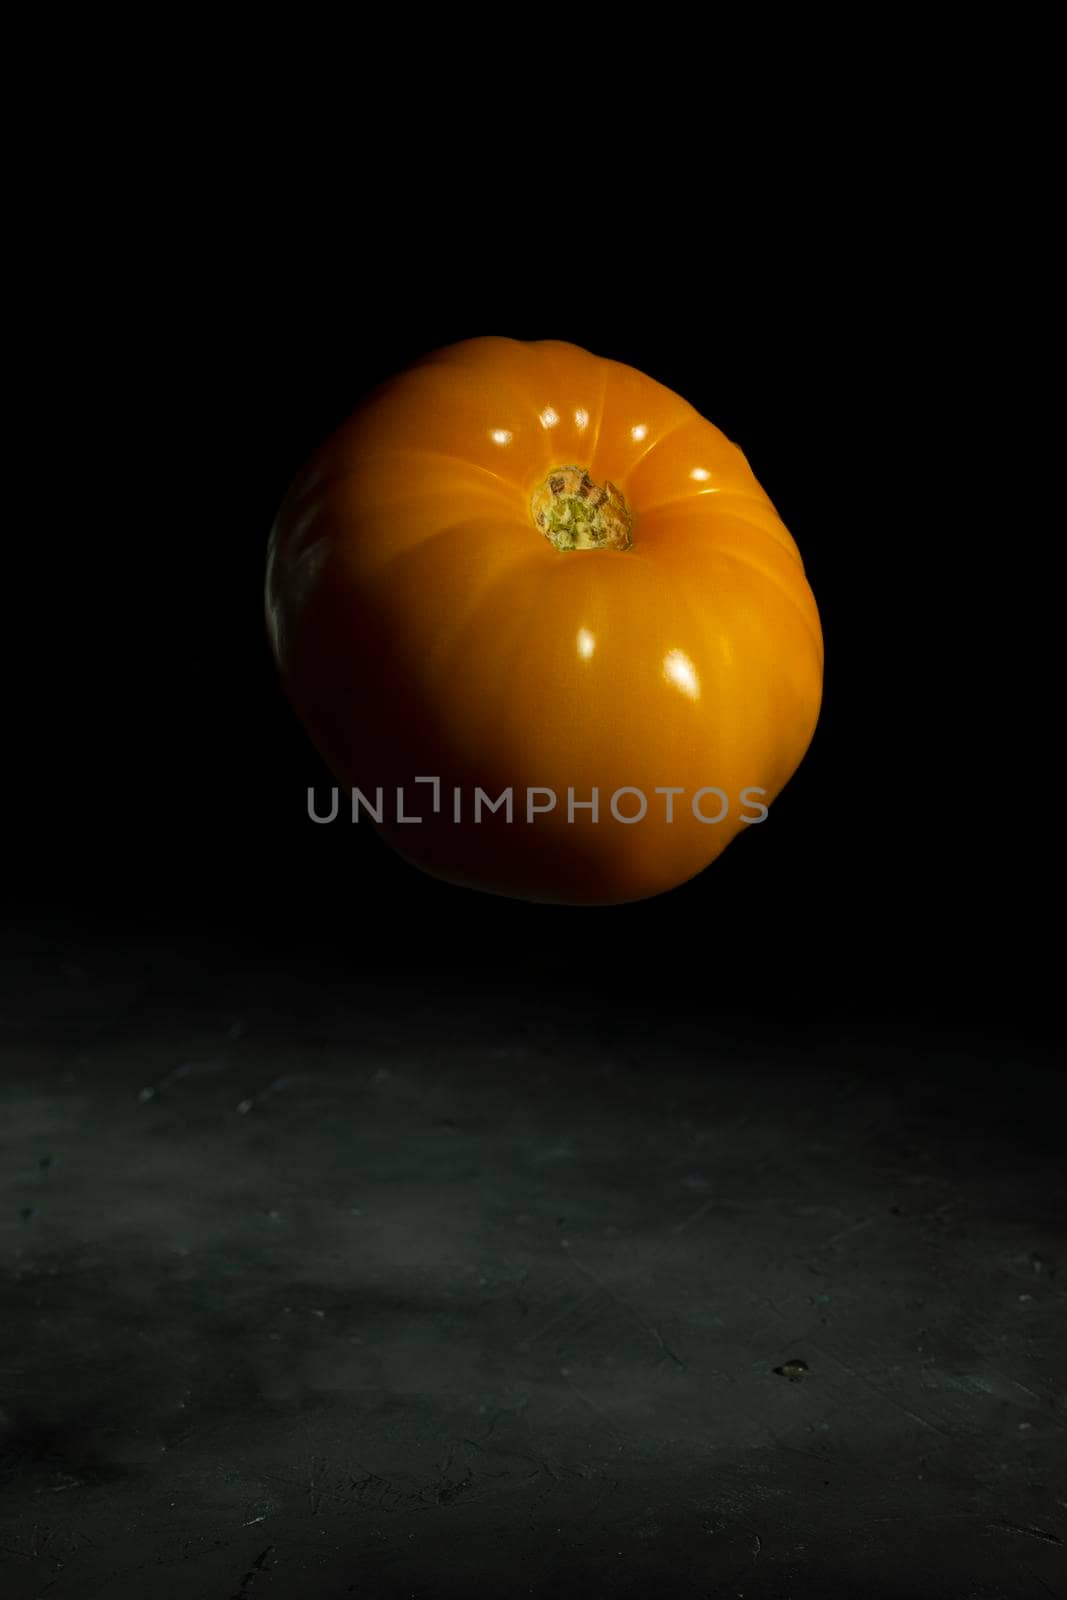 Fresh yellow tomato on the black background by sashokddt